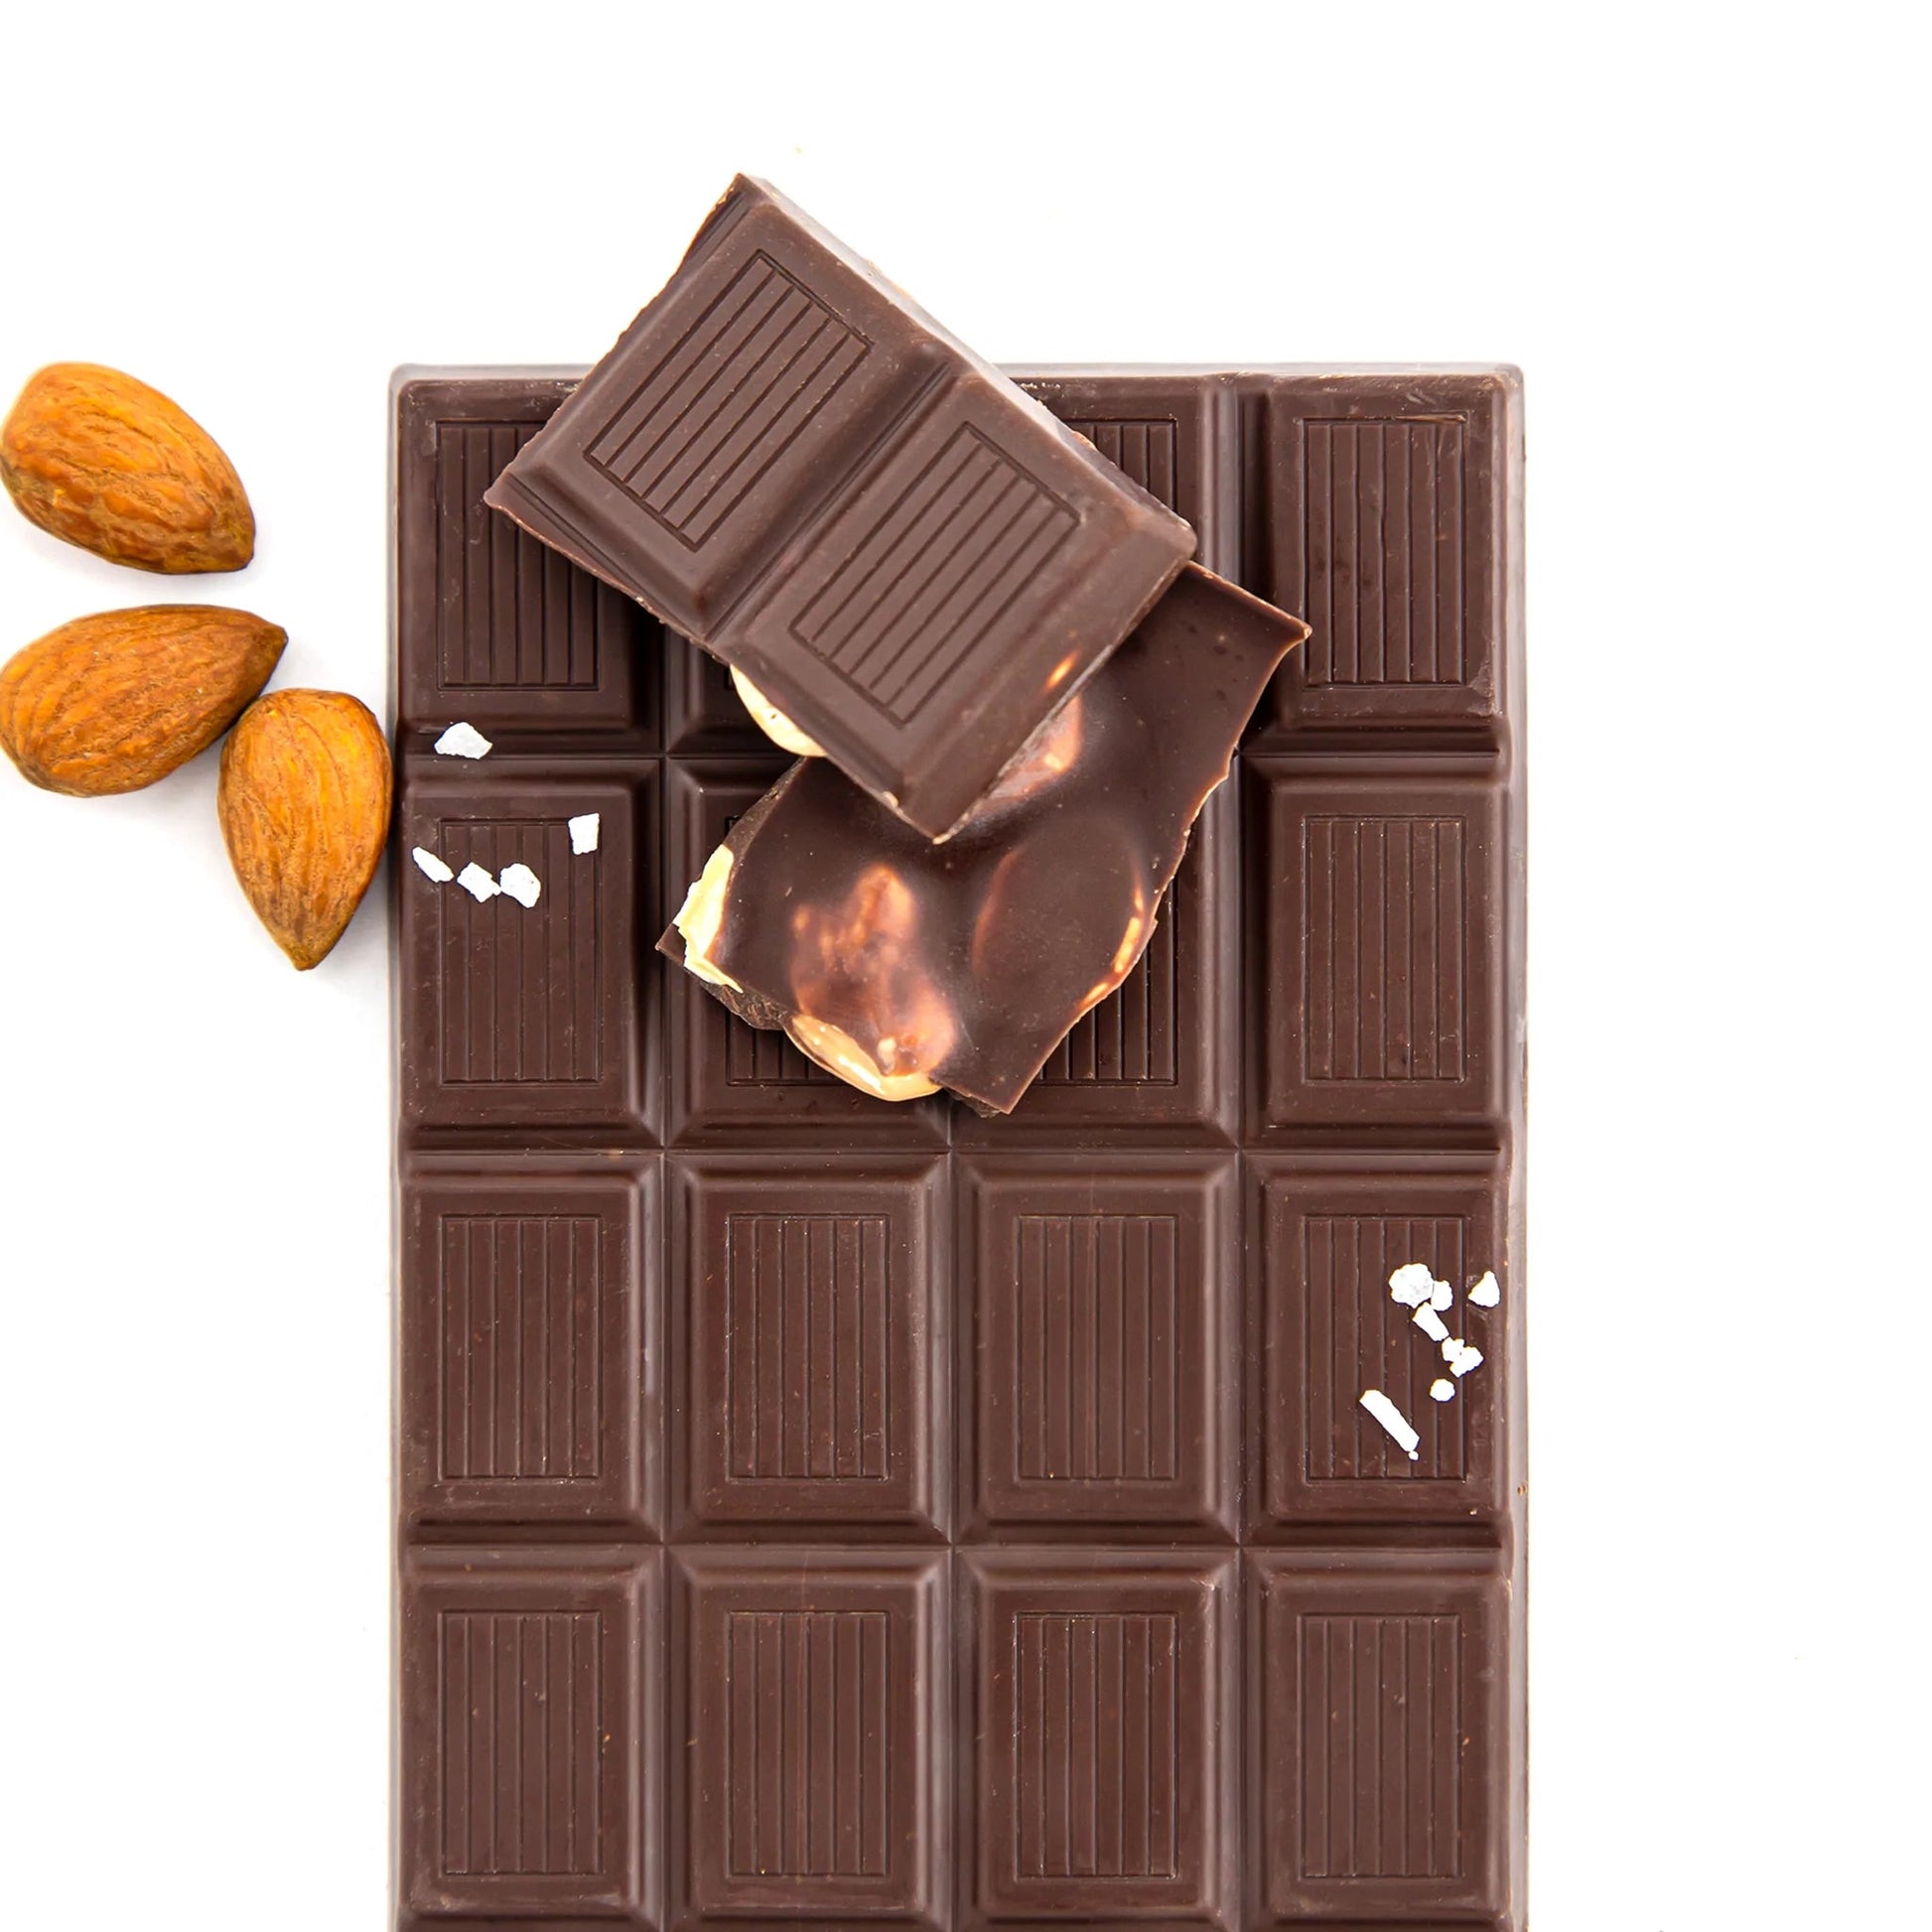 Organic Dark Chocolate Almond & Sea Salt, 55% Cacao - Global Hues Market